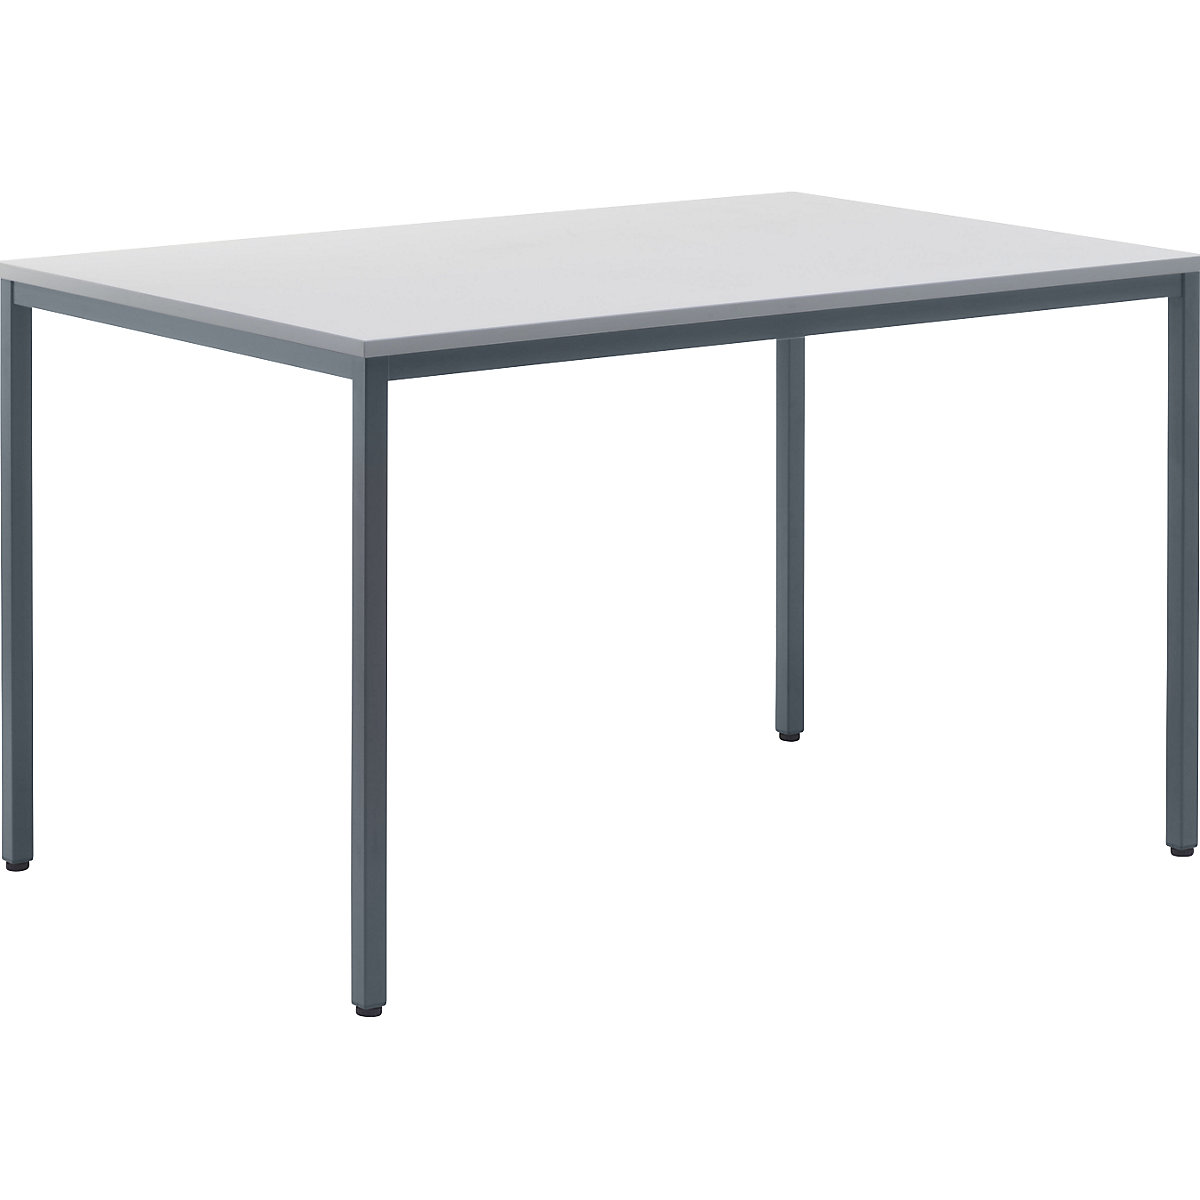 Multifunctionele tafel – eurokraft basic, h x b x d = 720 x 1200 x 800 mm, blad lichtgrijs, frame basaltgrijs